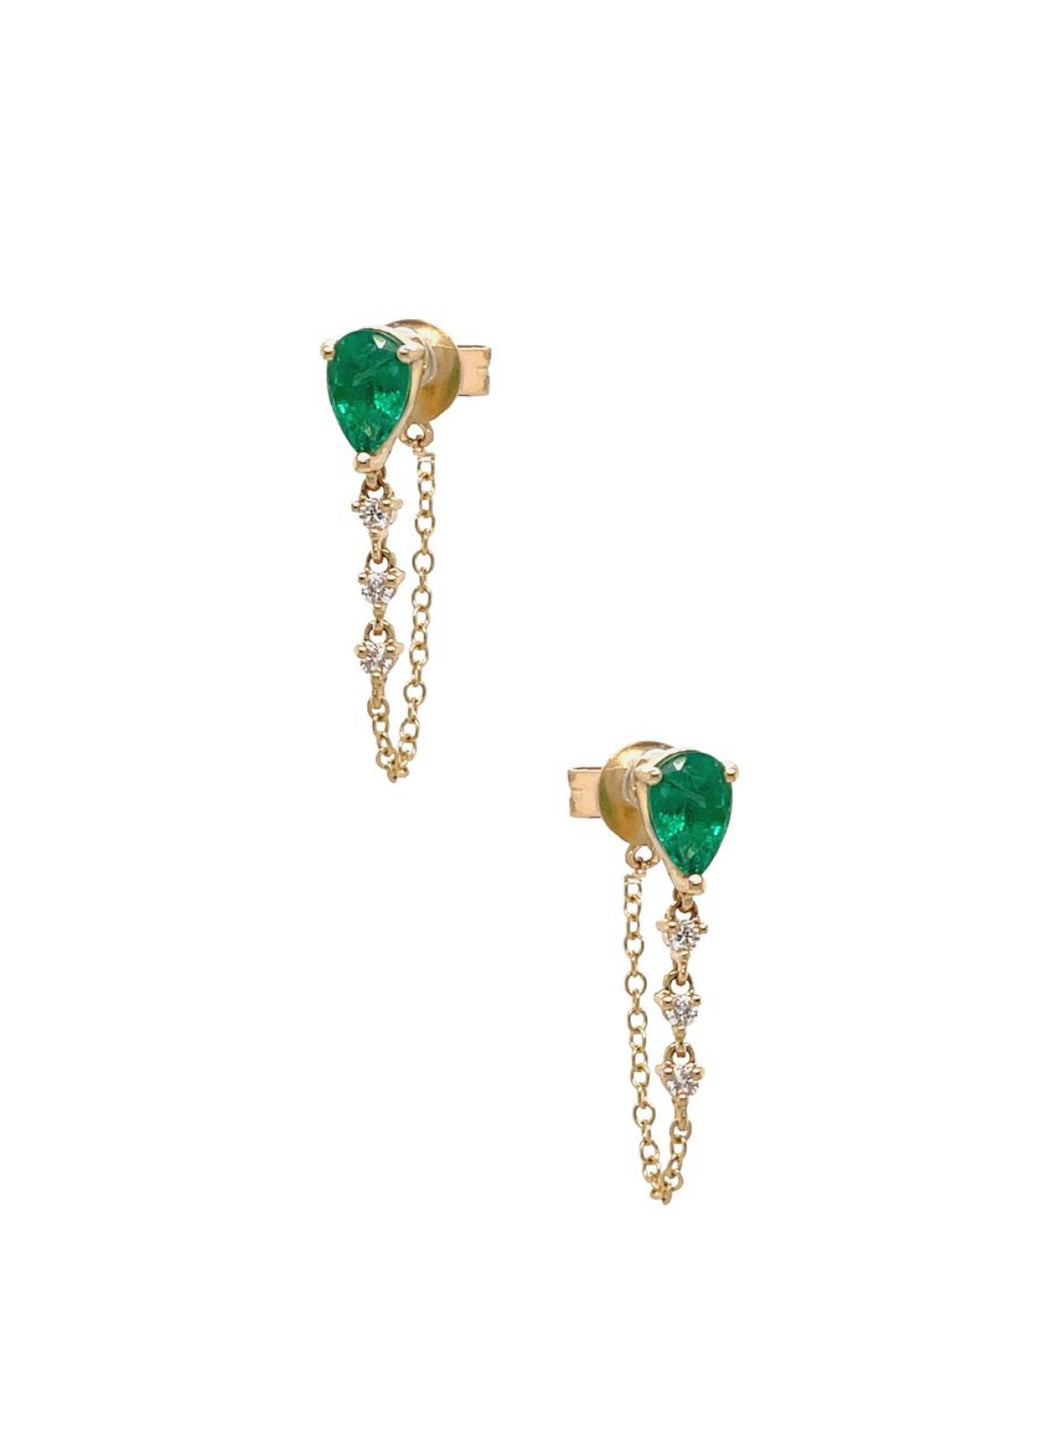 Emerald teardrop and diamond earrings